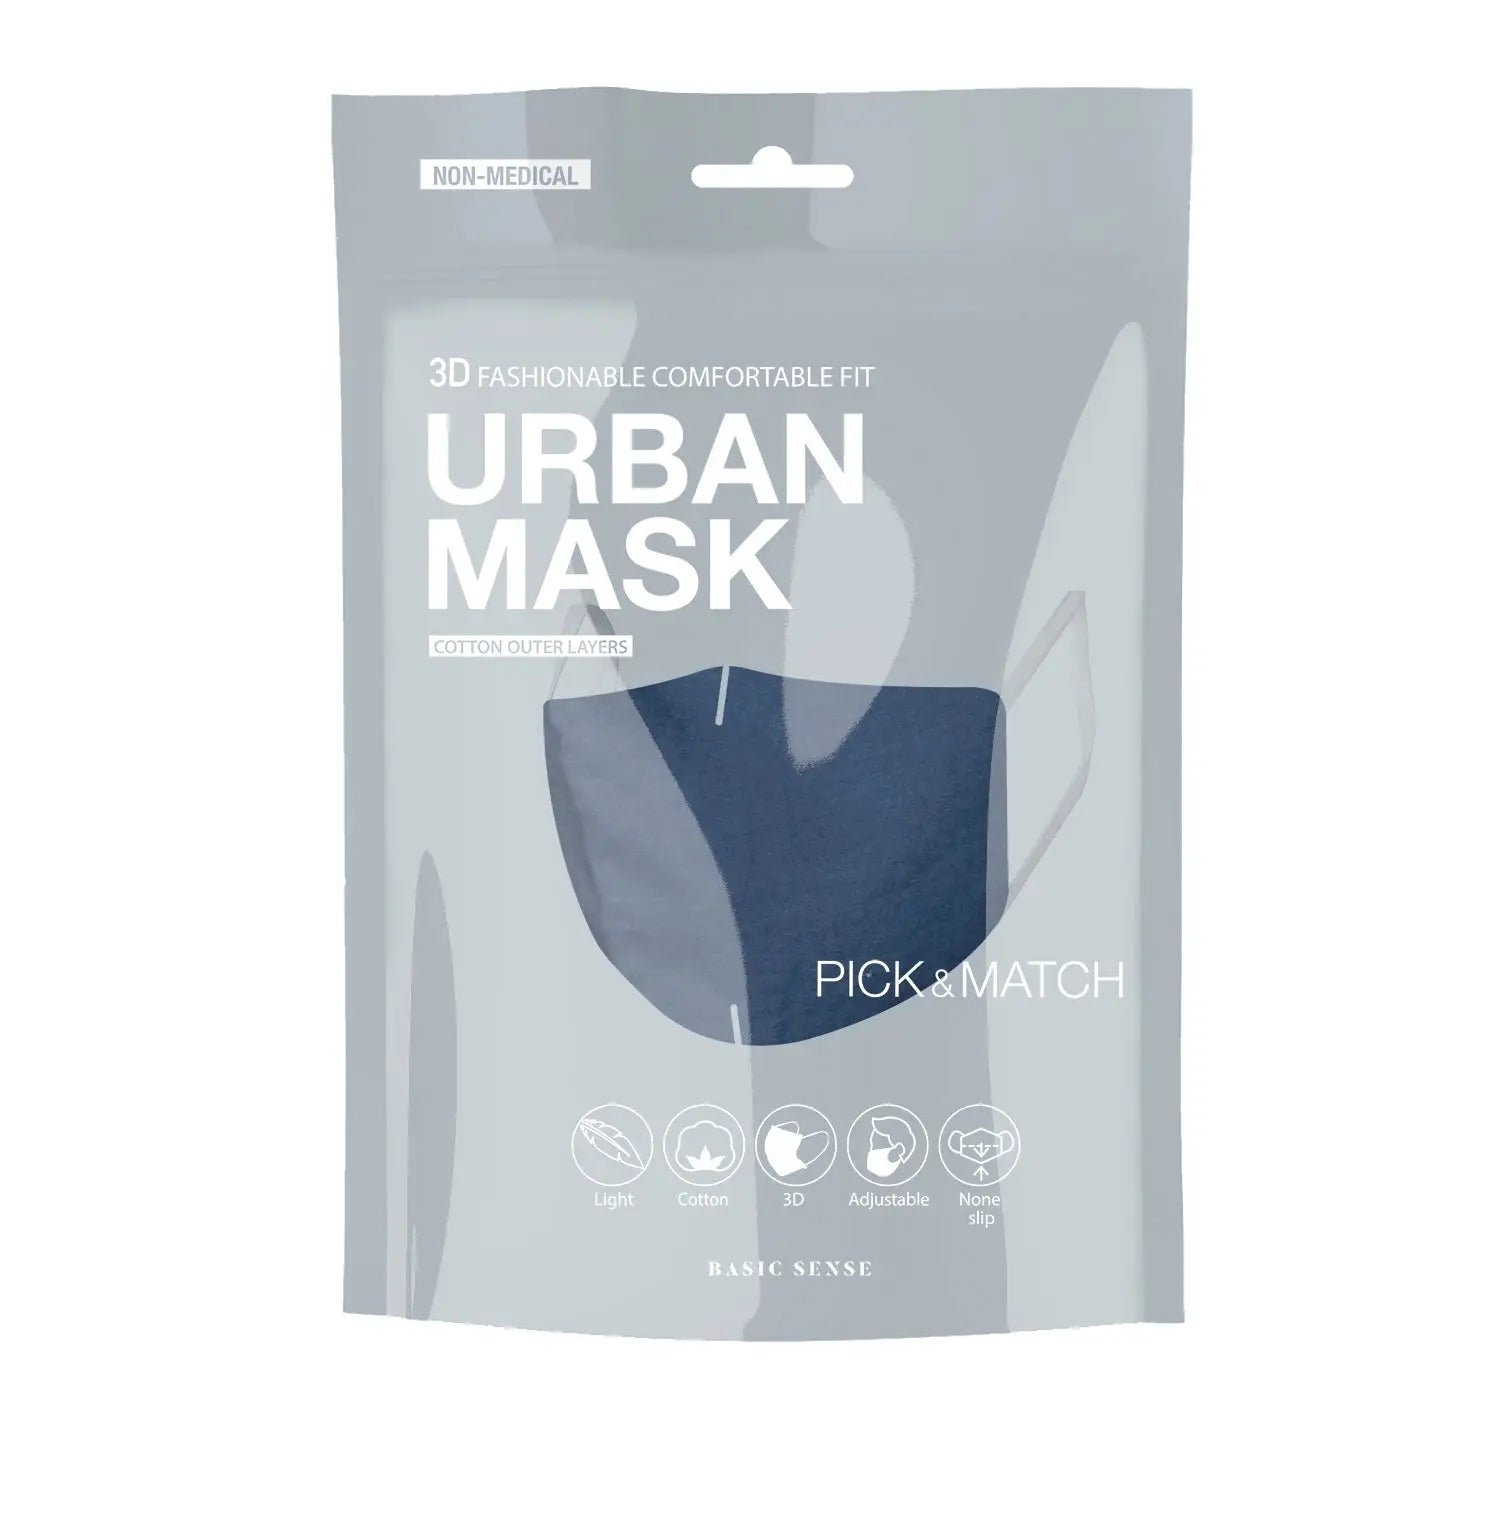 Organic cotton black face mask with stylish design